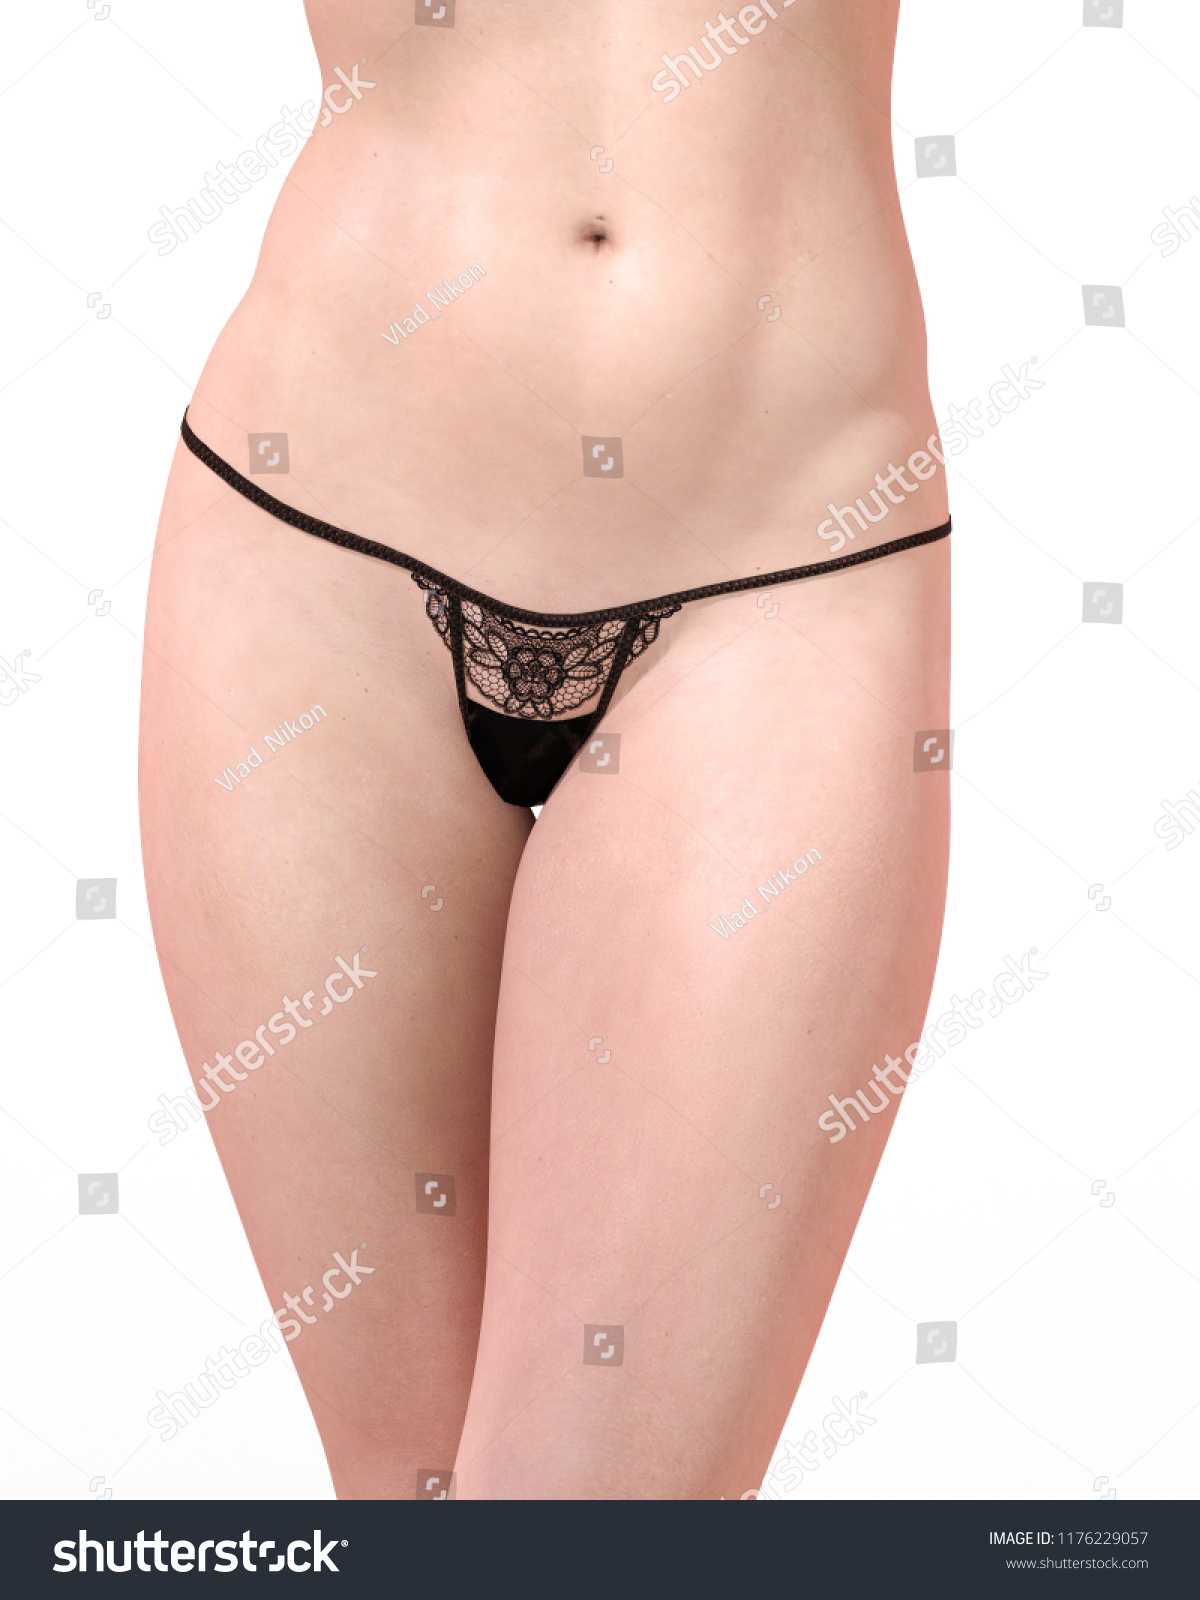 Girls In Sexy Panties